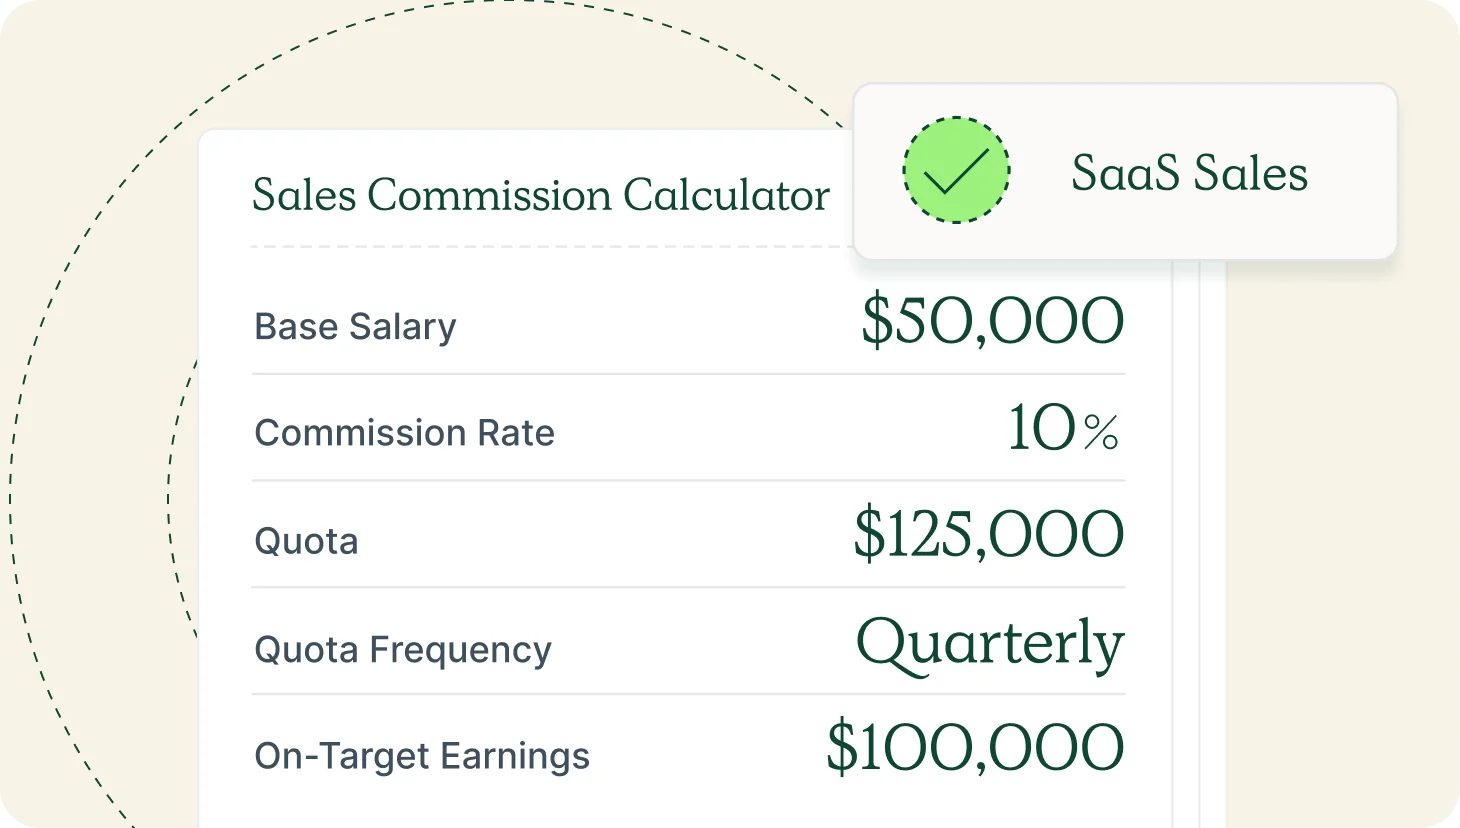 sales commission calculator image